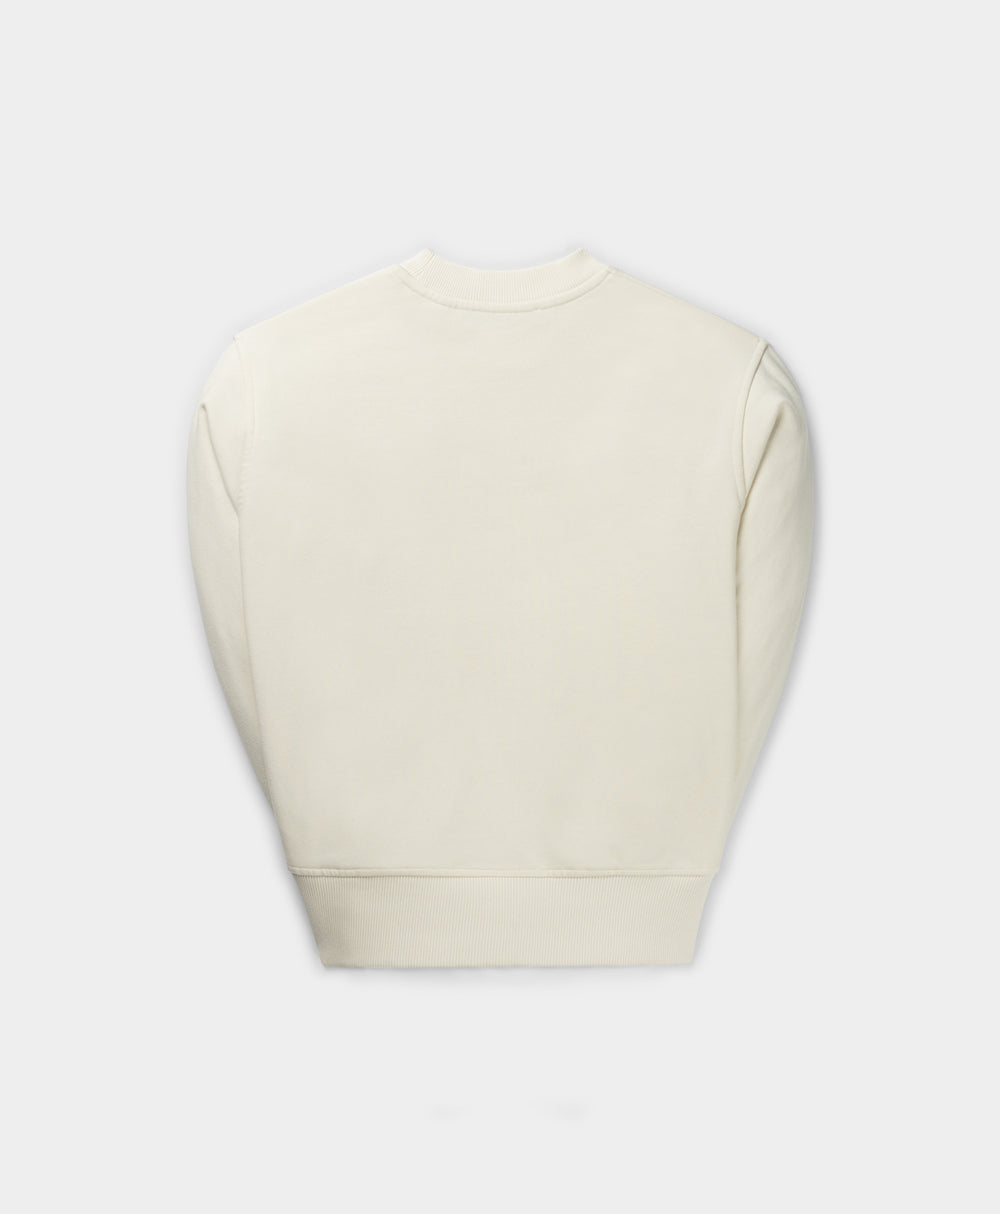 DP - Egret White Escript Sweater - Packshot - Rear